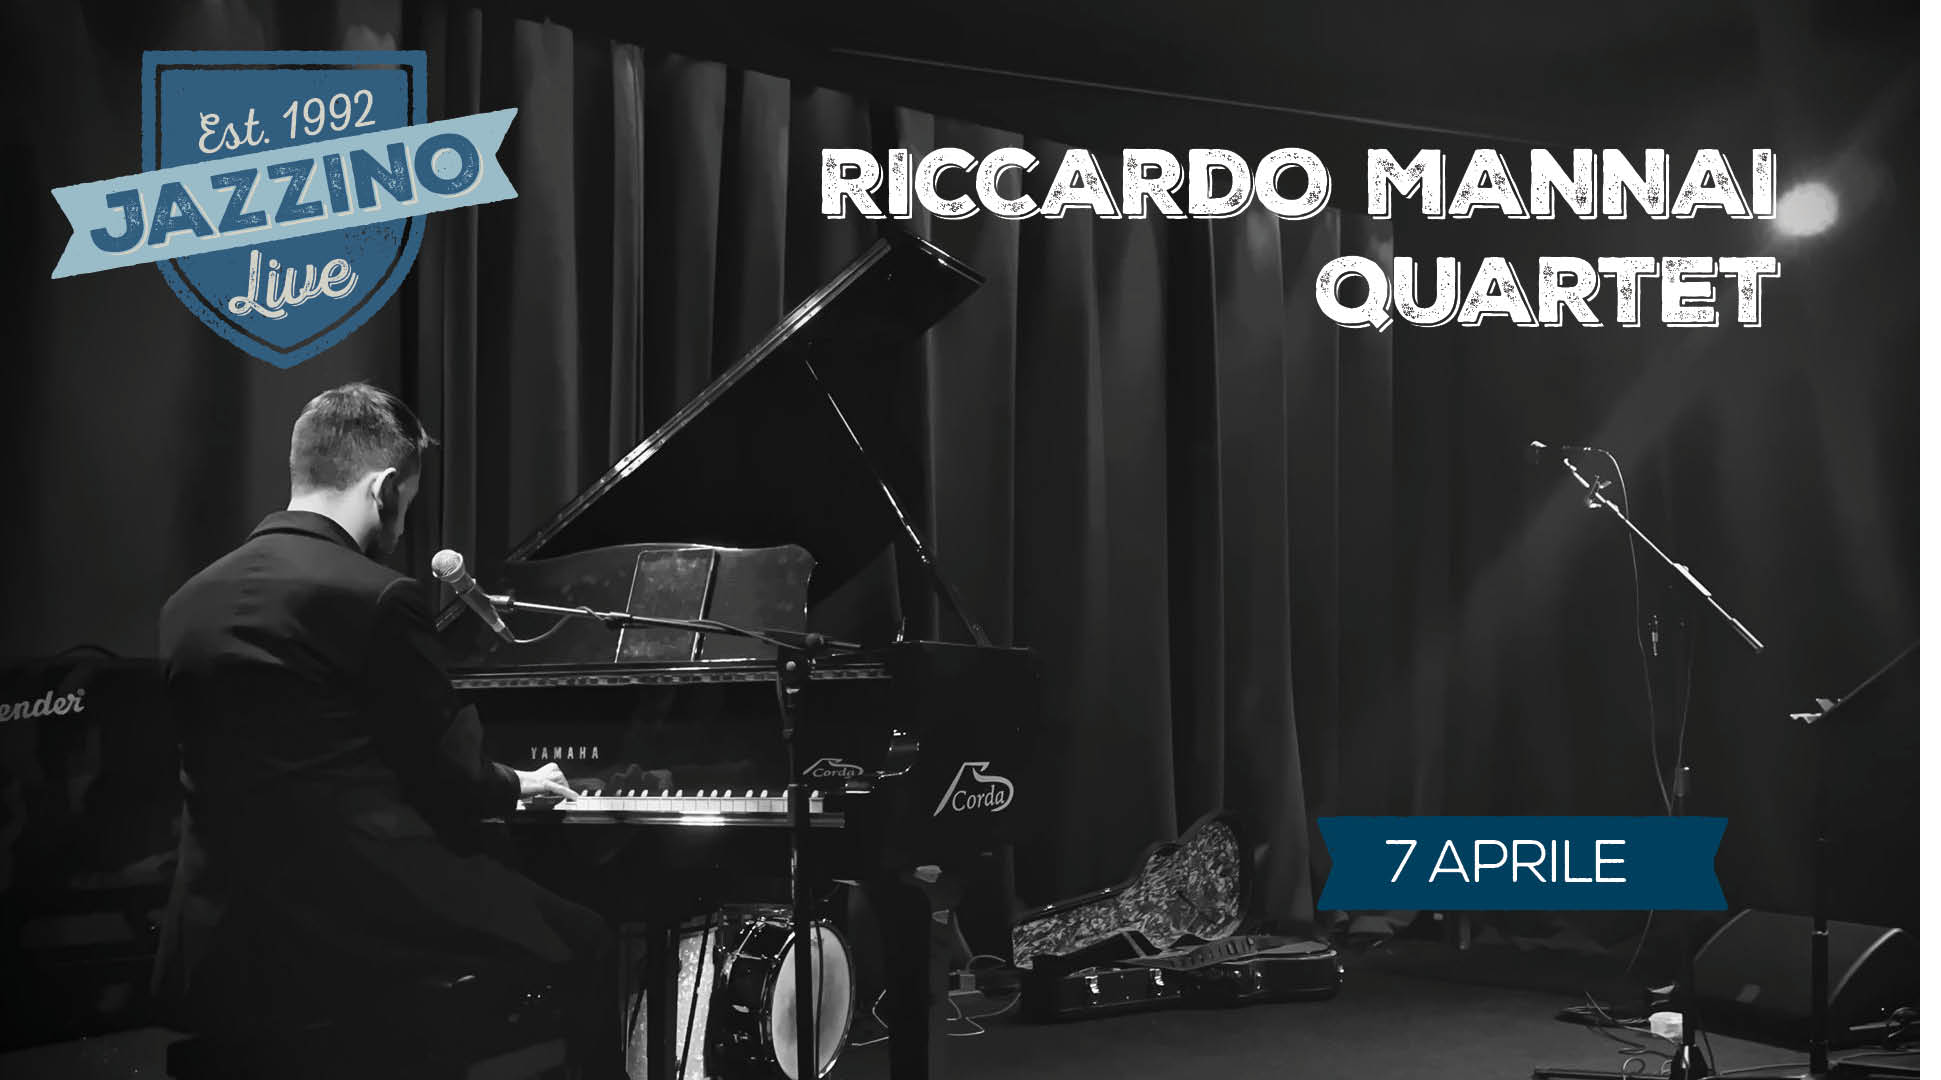 riccardo-mannai-quartet-7-aprile-live-jazzino